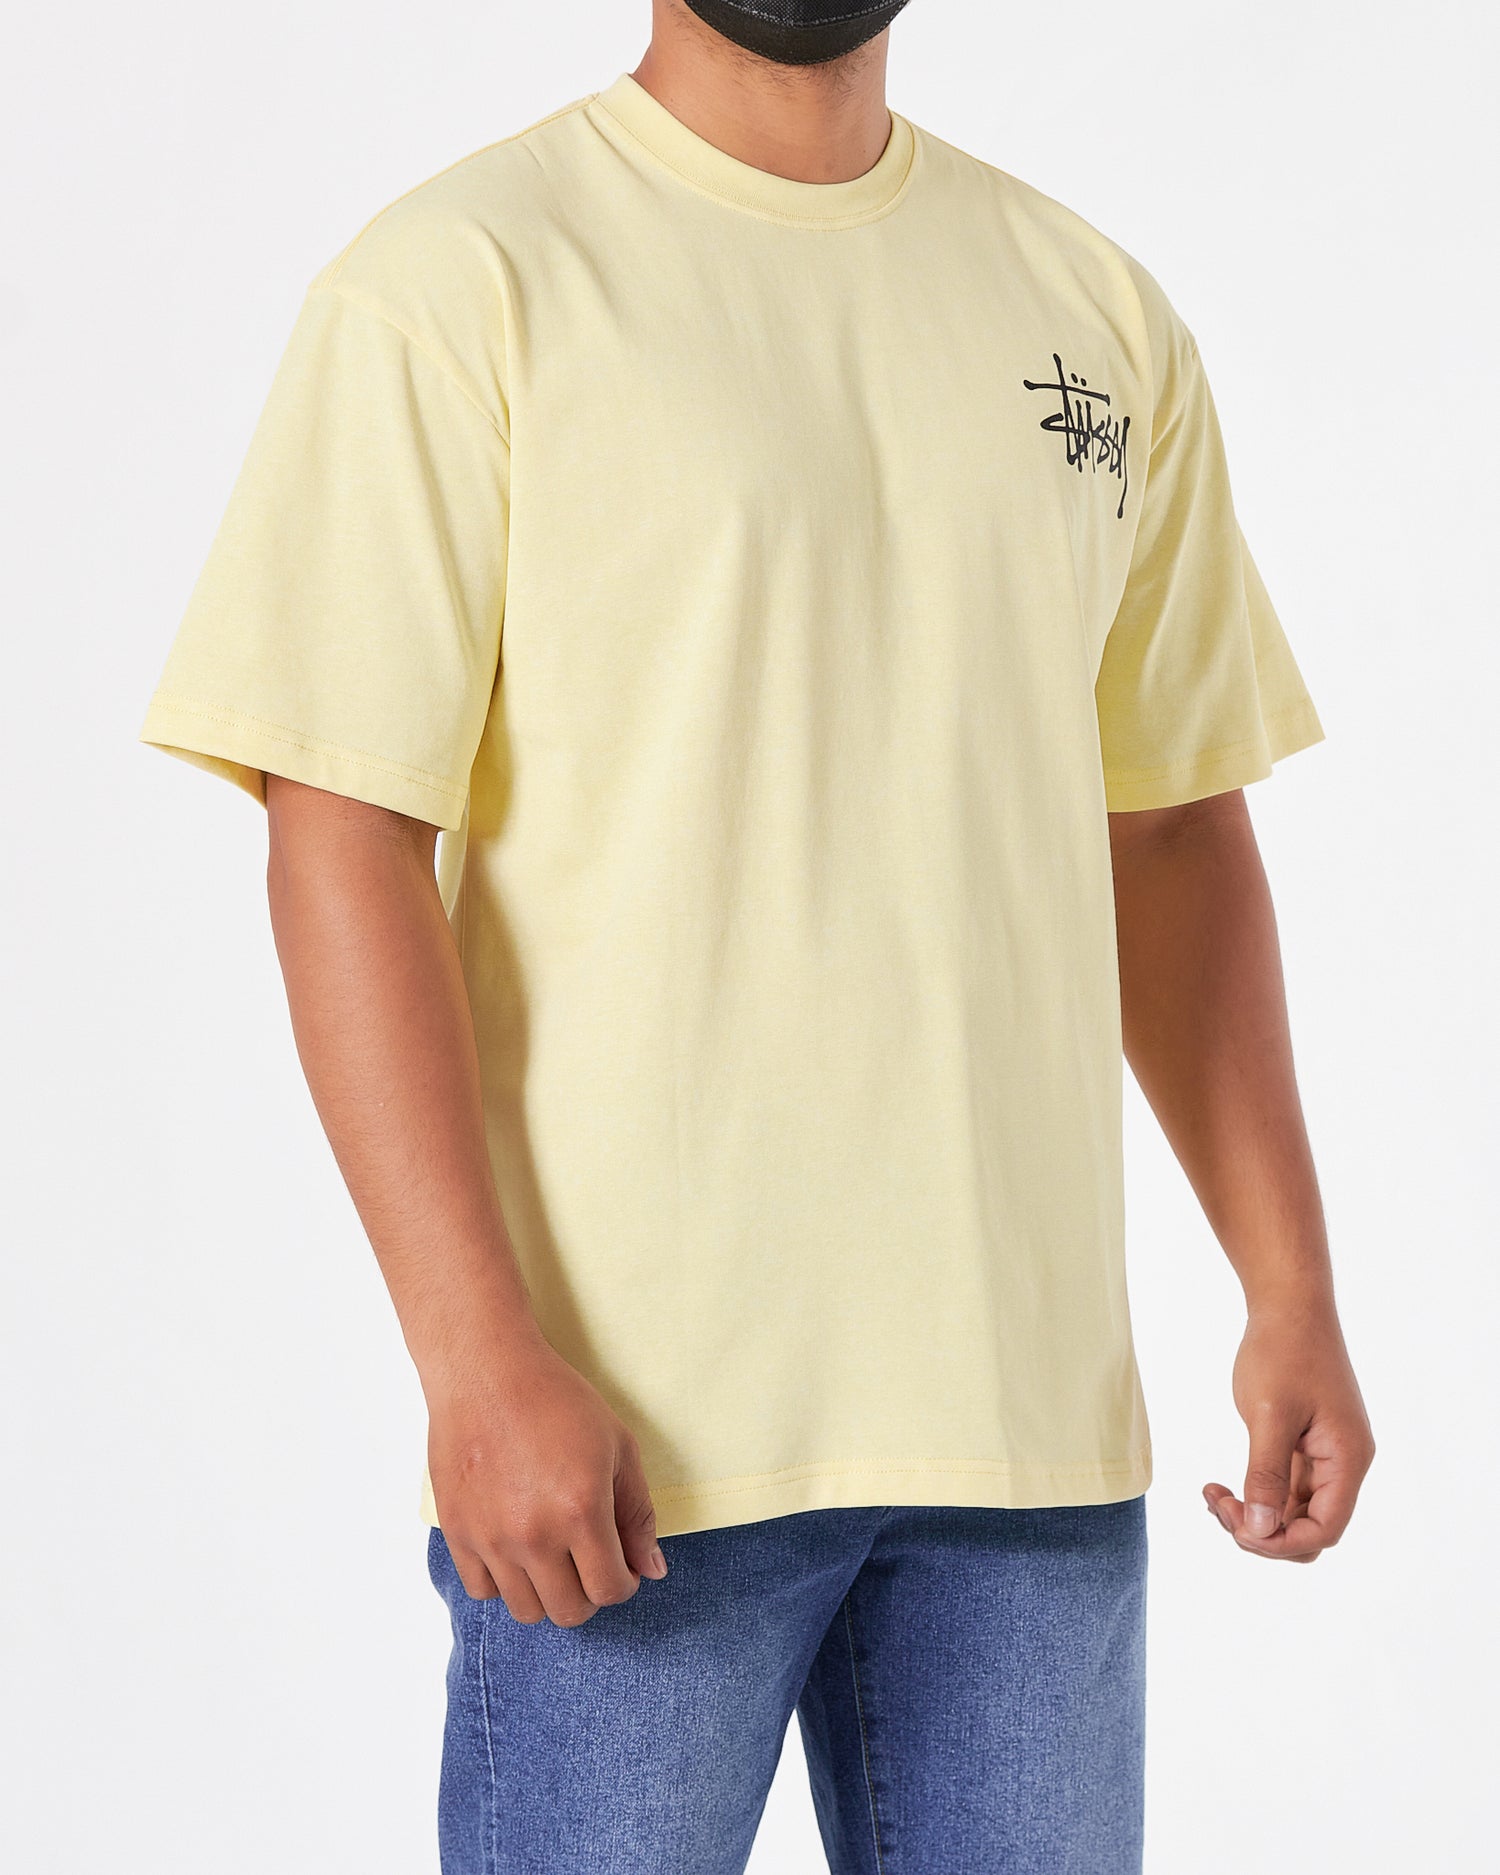 STU Back Logo Printed Men Yellow T-Shirt 20.90